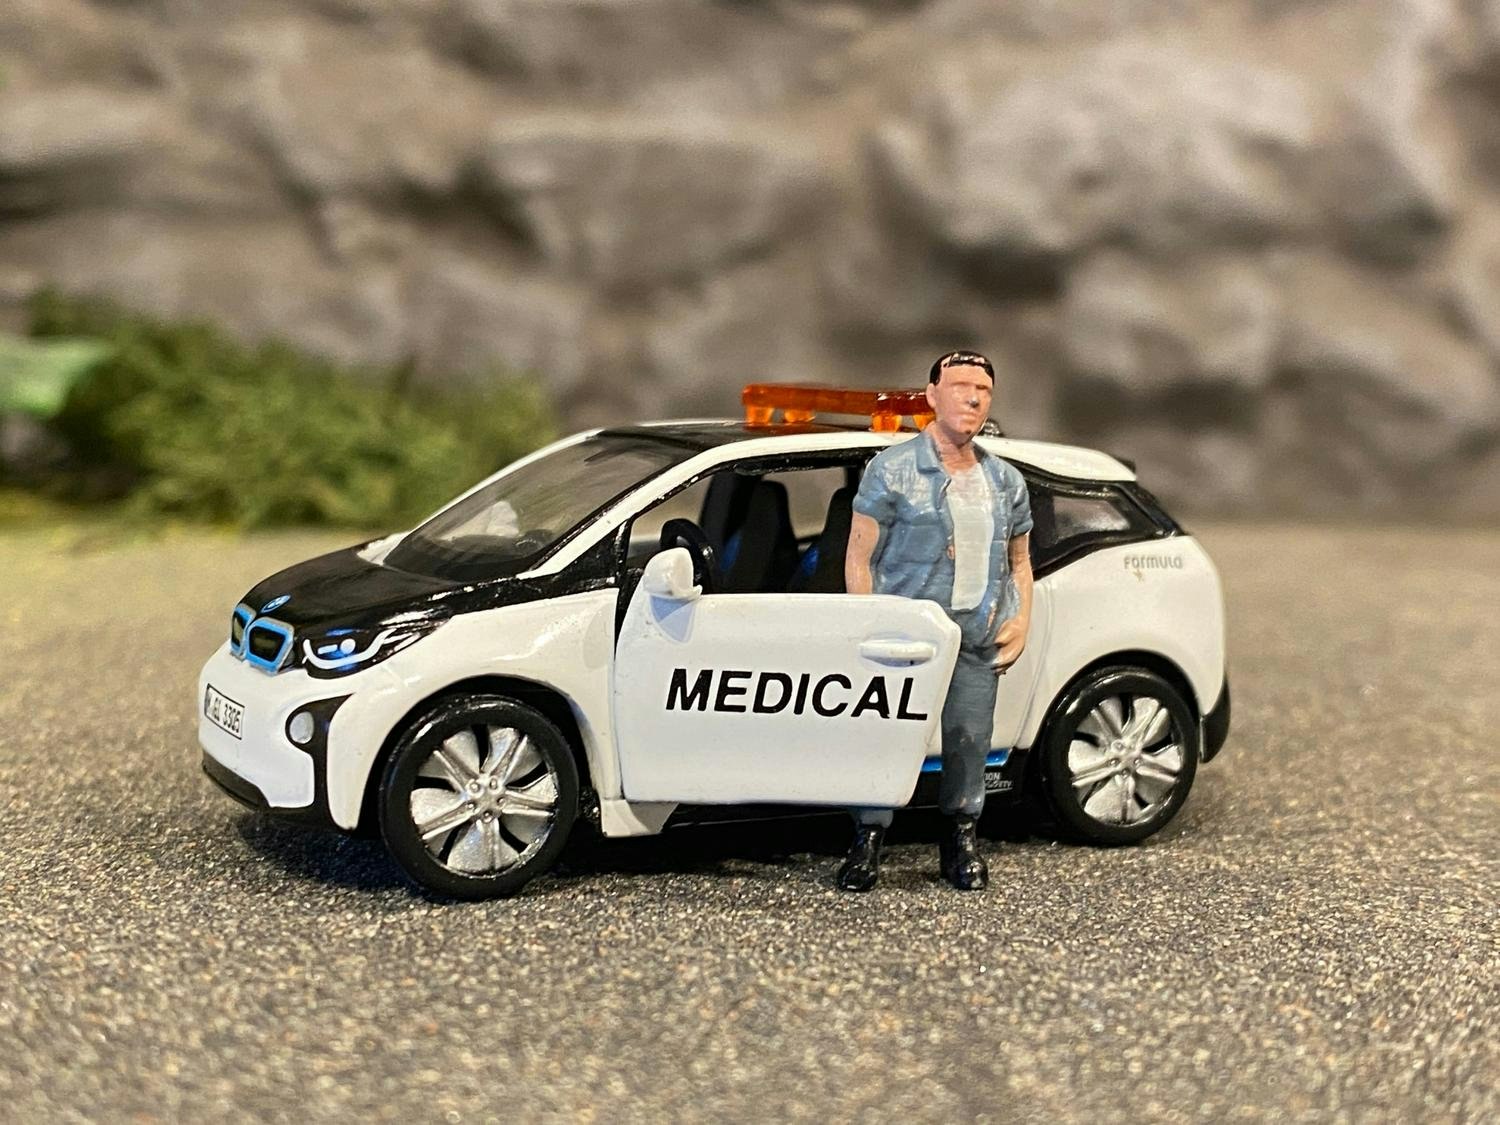 Skala 1/64 BMW i3 Medical Car fr Tiny Toys